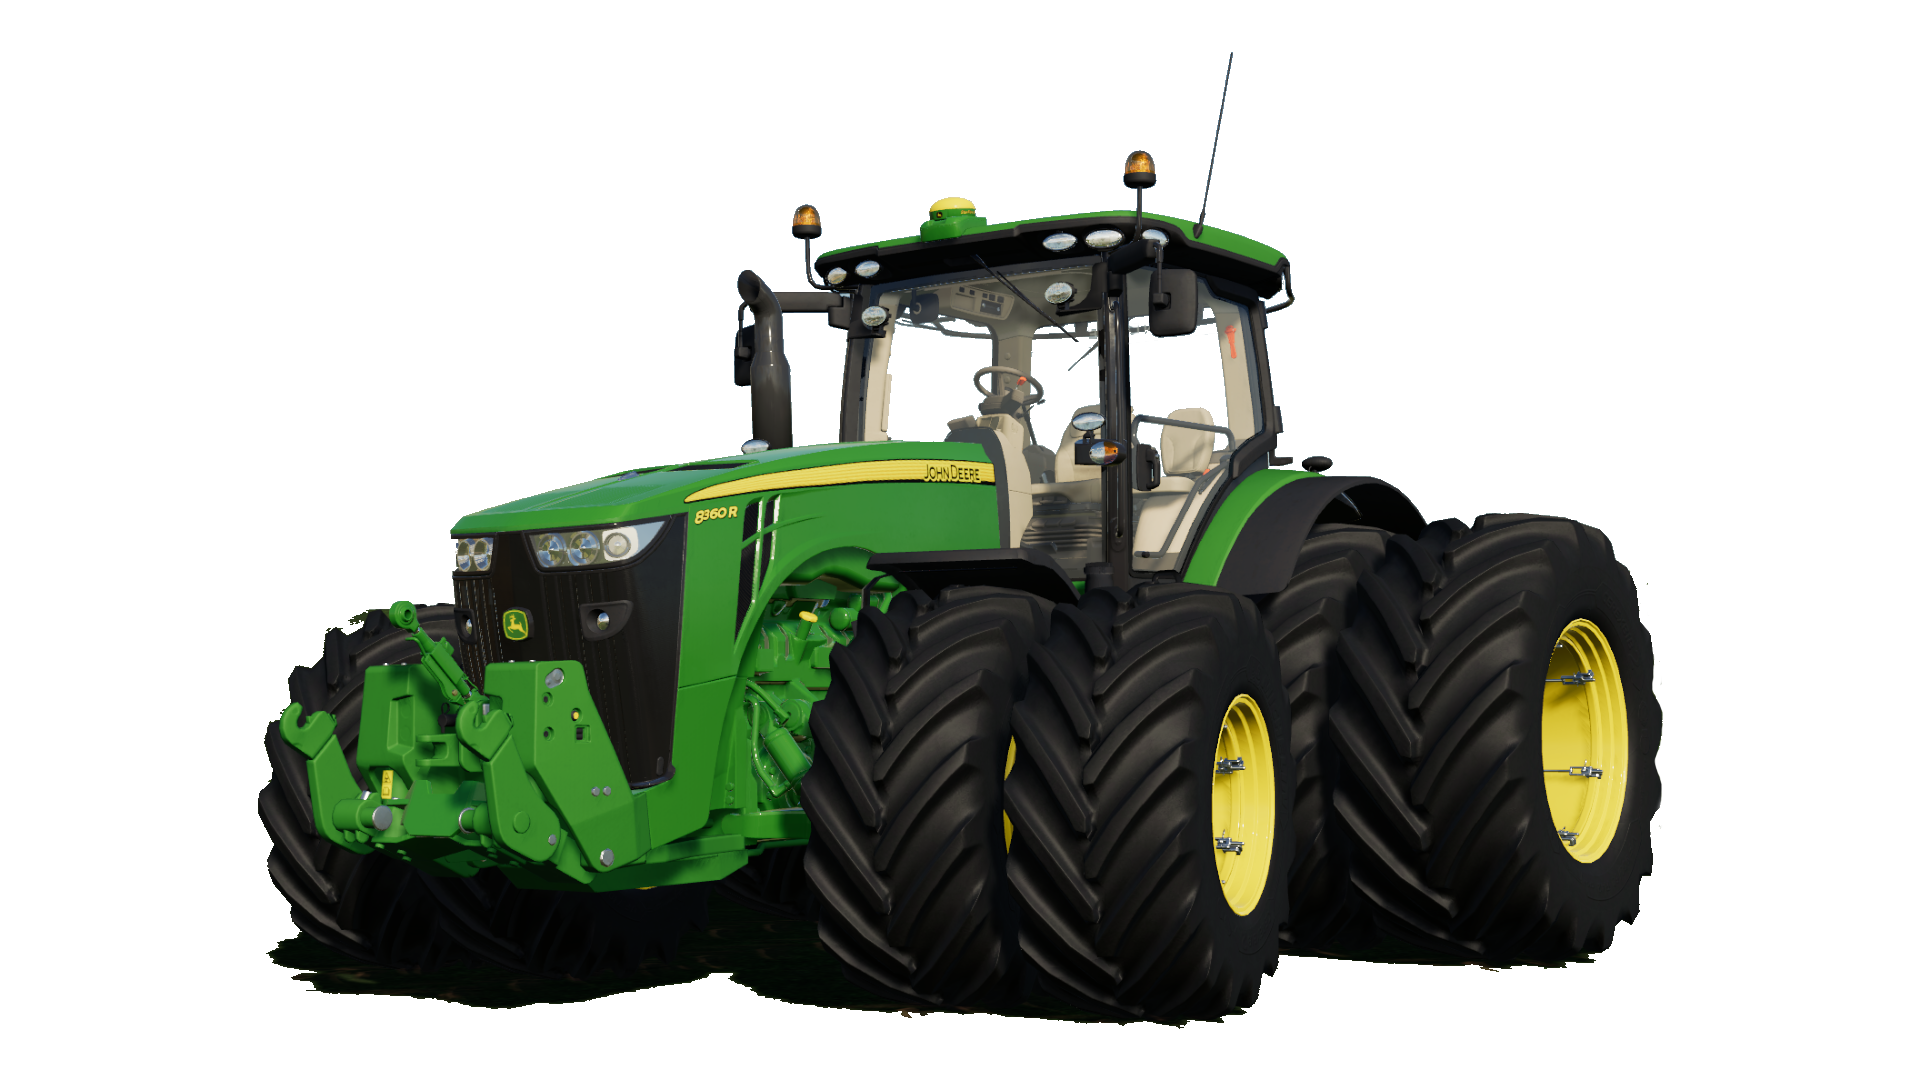 mahindra tractor farming simulator 19